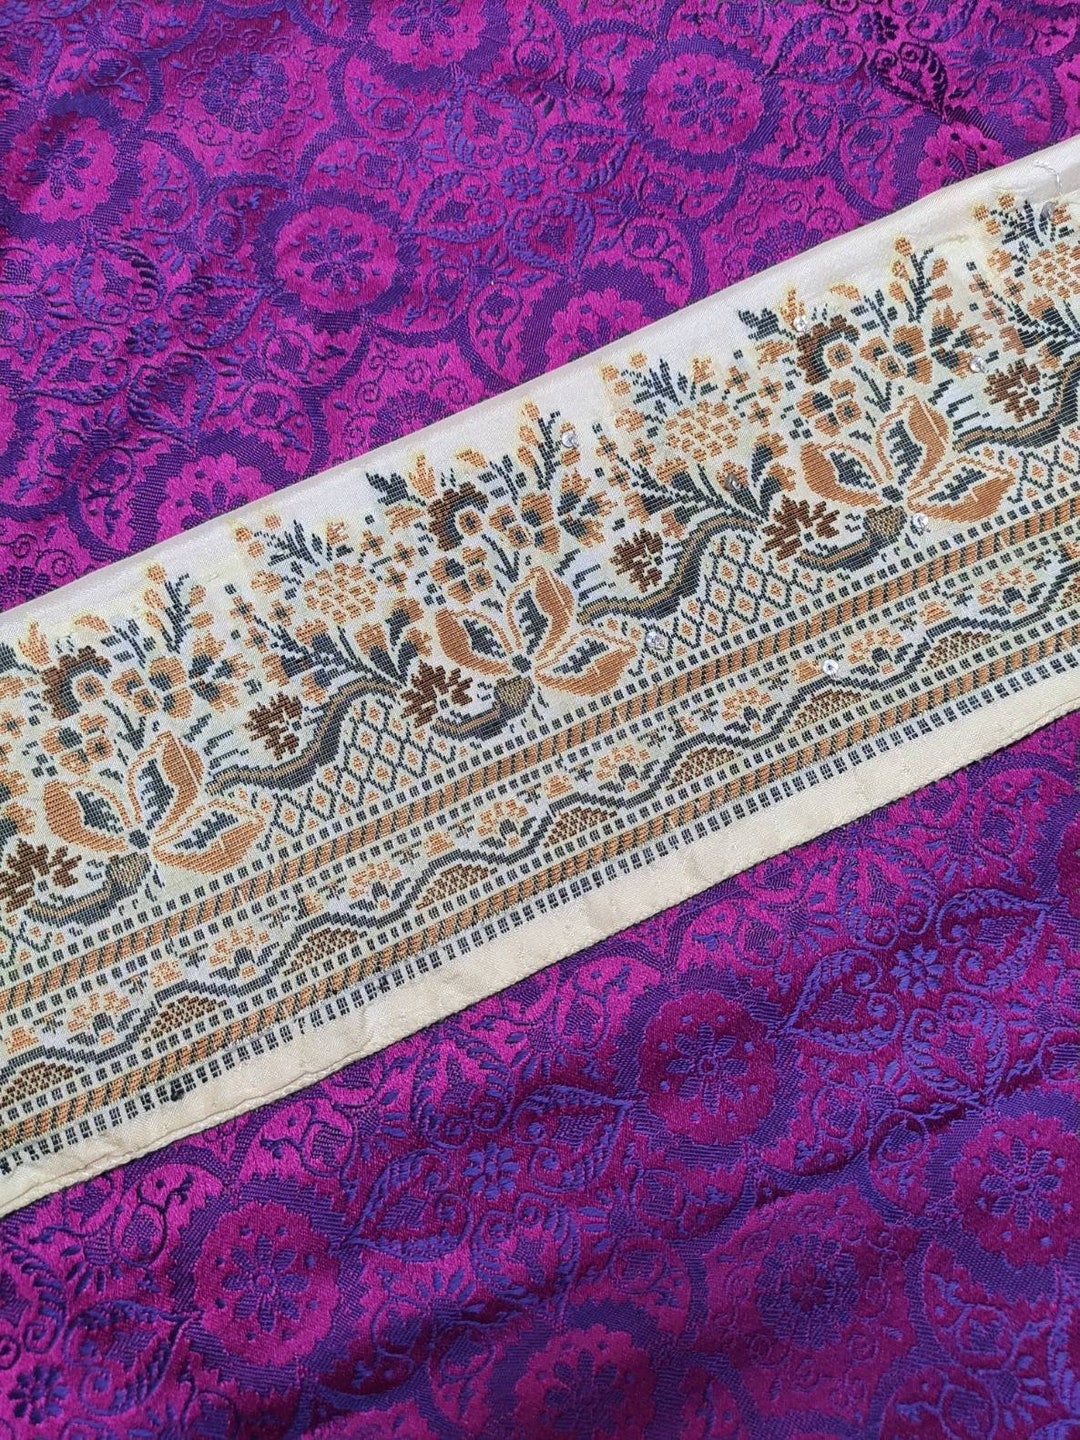 Vintage Indian Sari Border Sewing Embroidered Trim Ribbon - Etsy